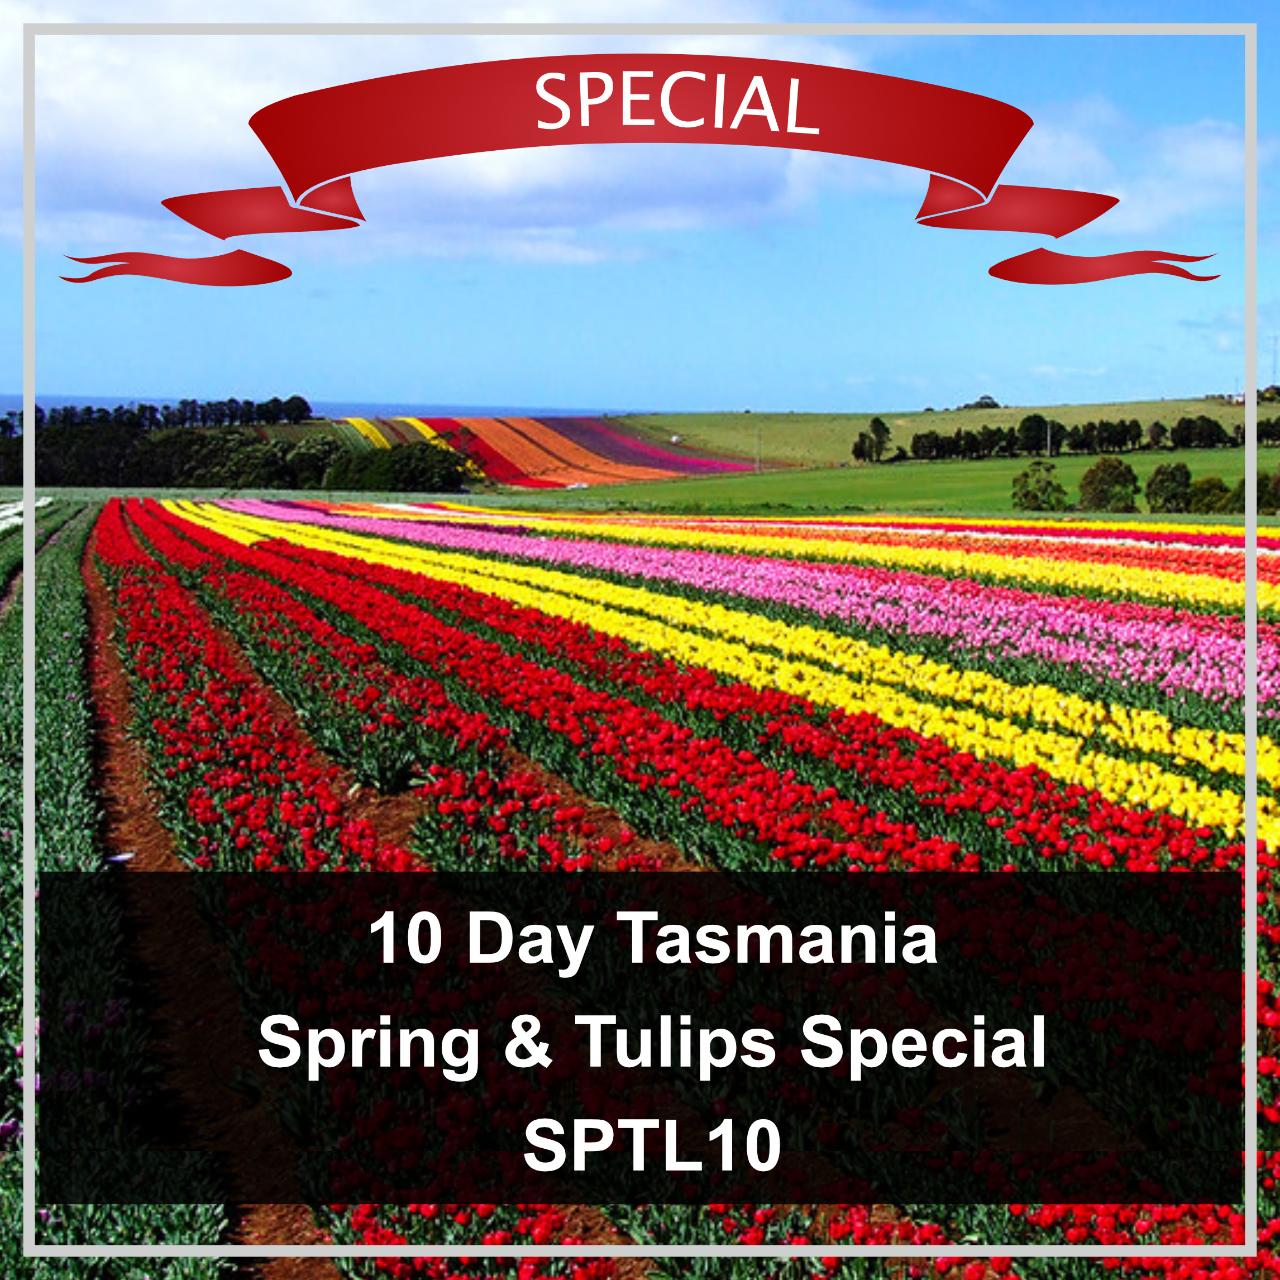 10 Day Tasmania Spring & Tulips Special